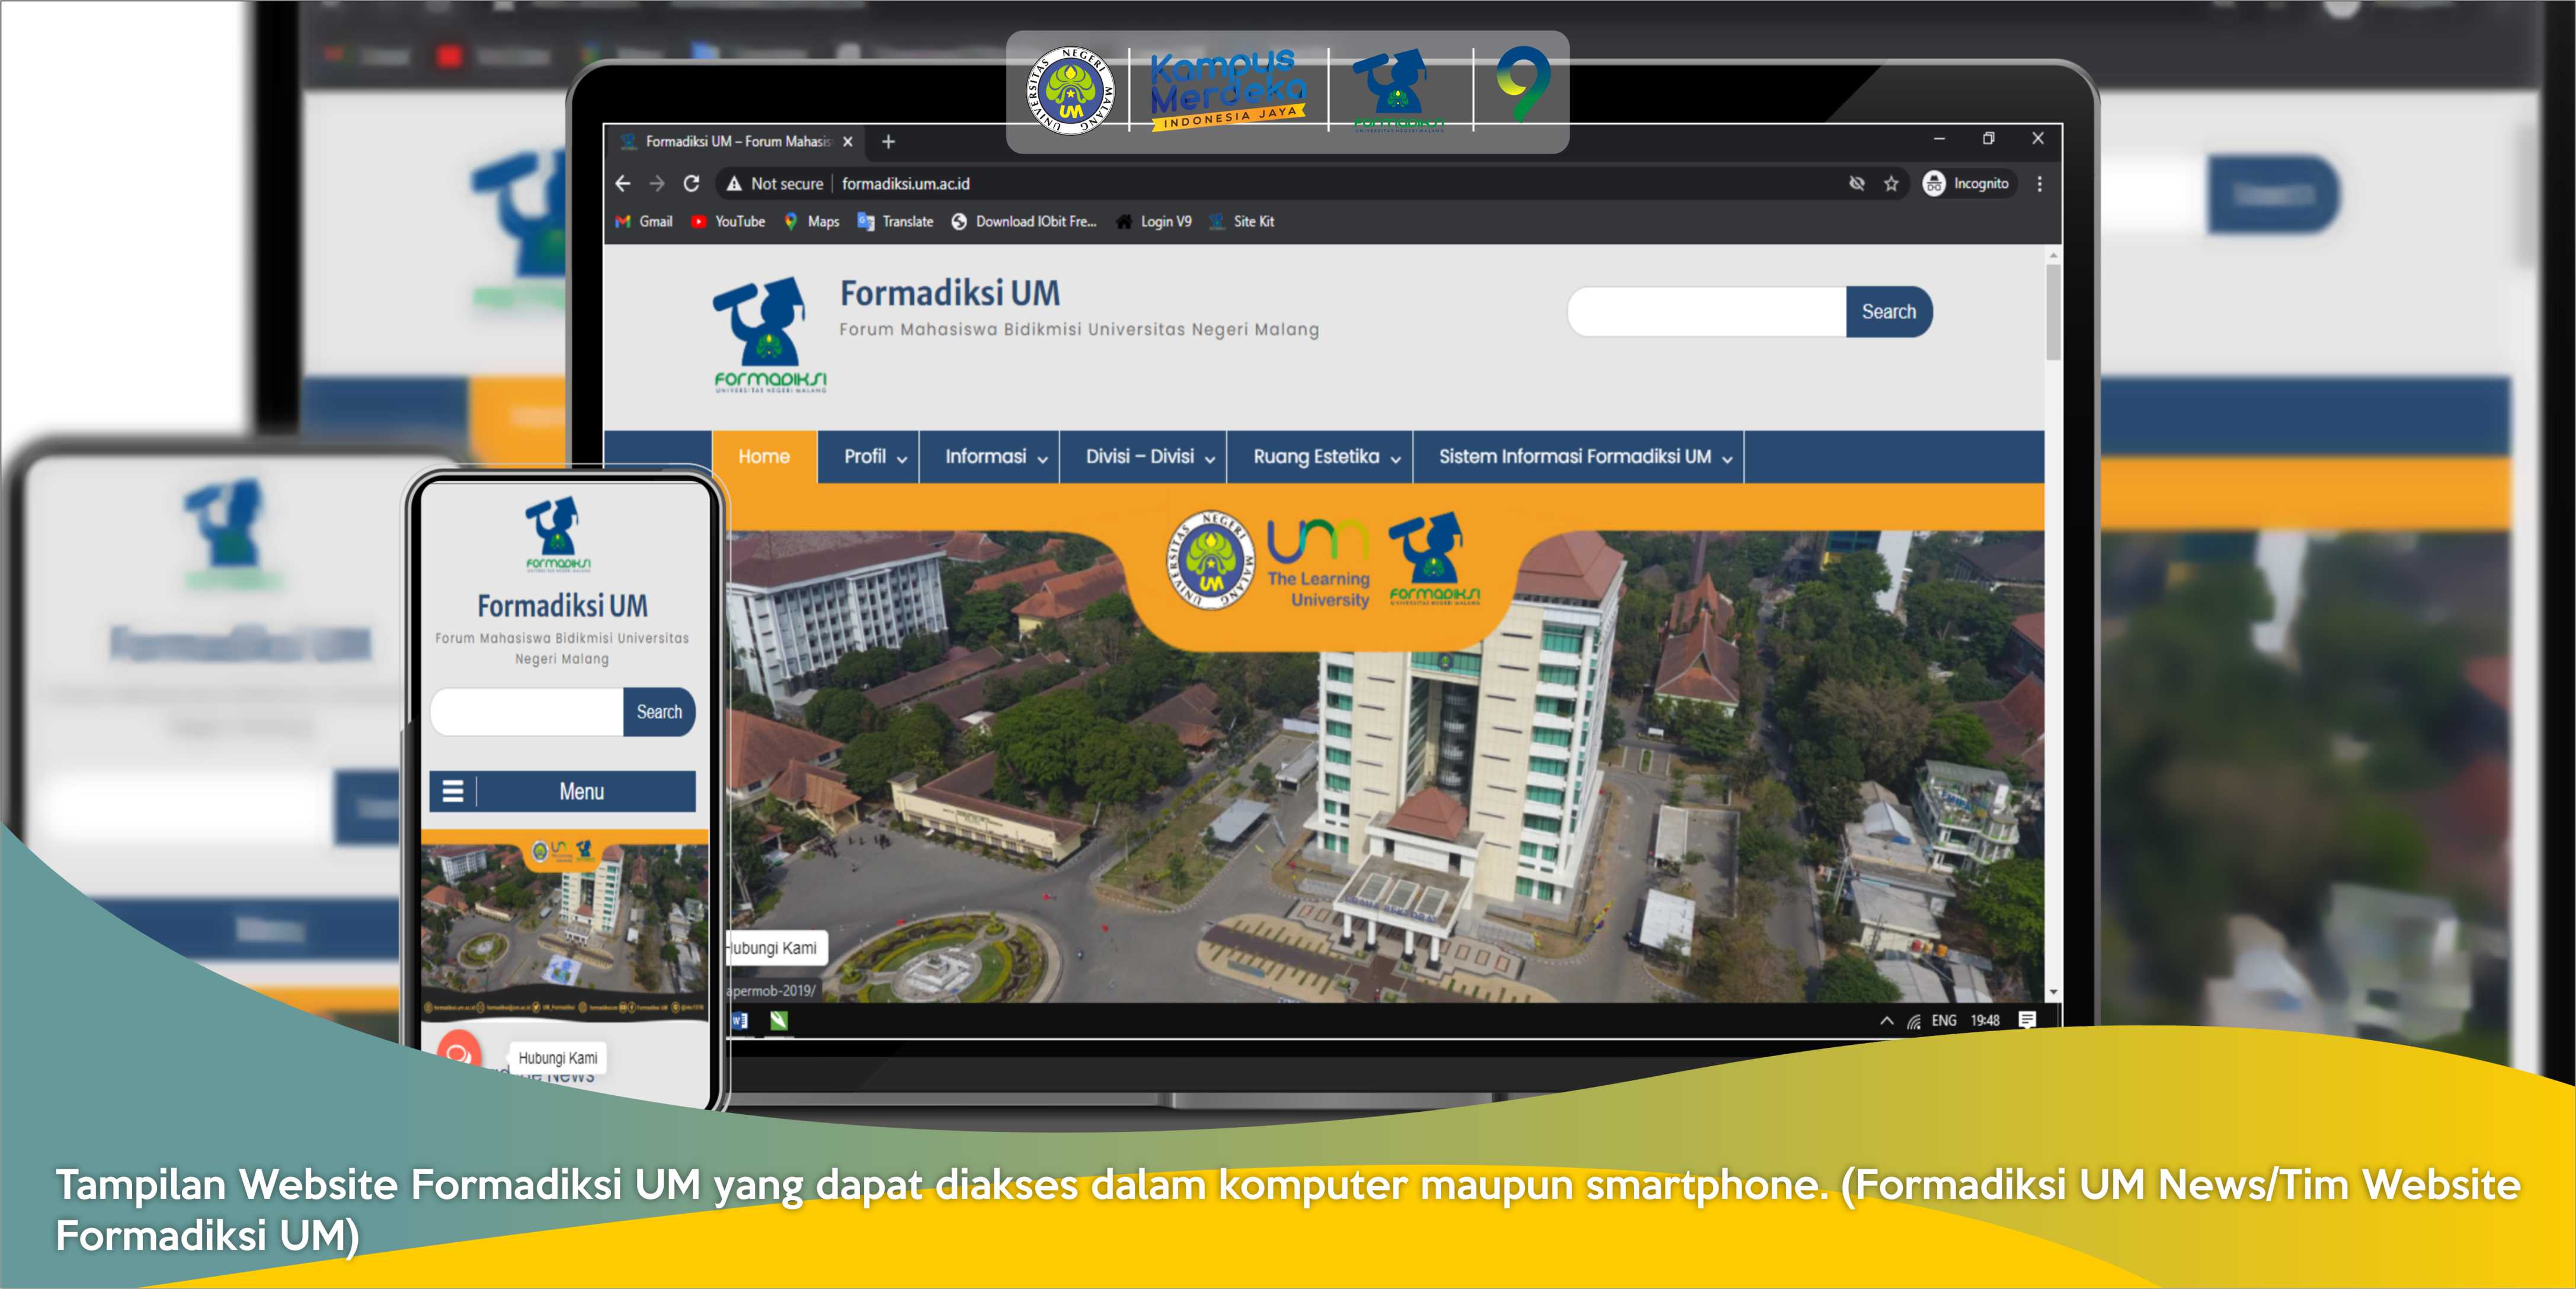 Formadiksi UM on Website: Wadah Pemberi Informasi Penuh Inovasi